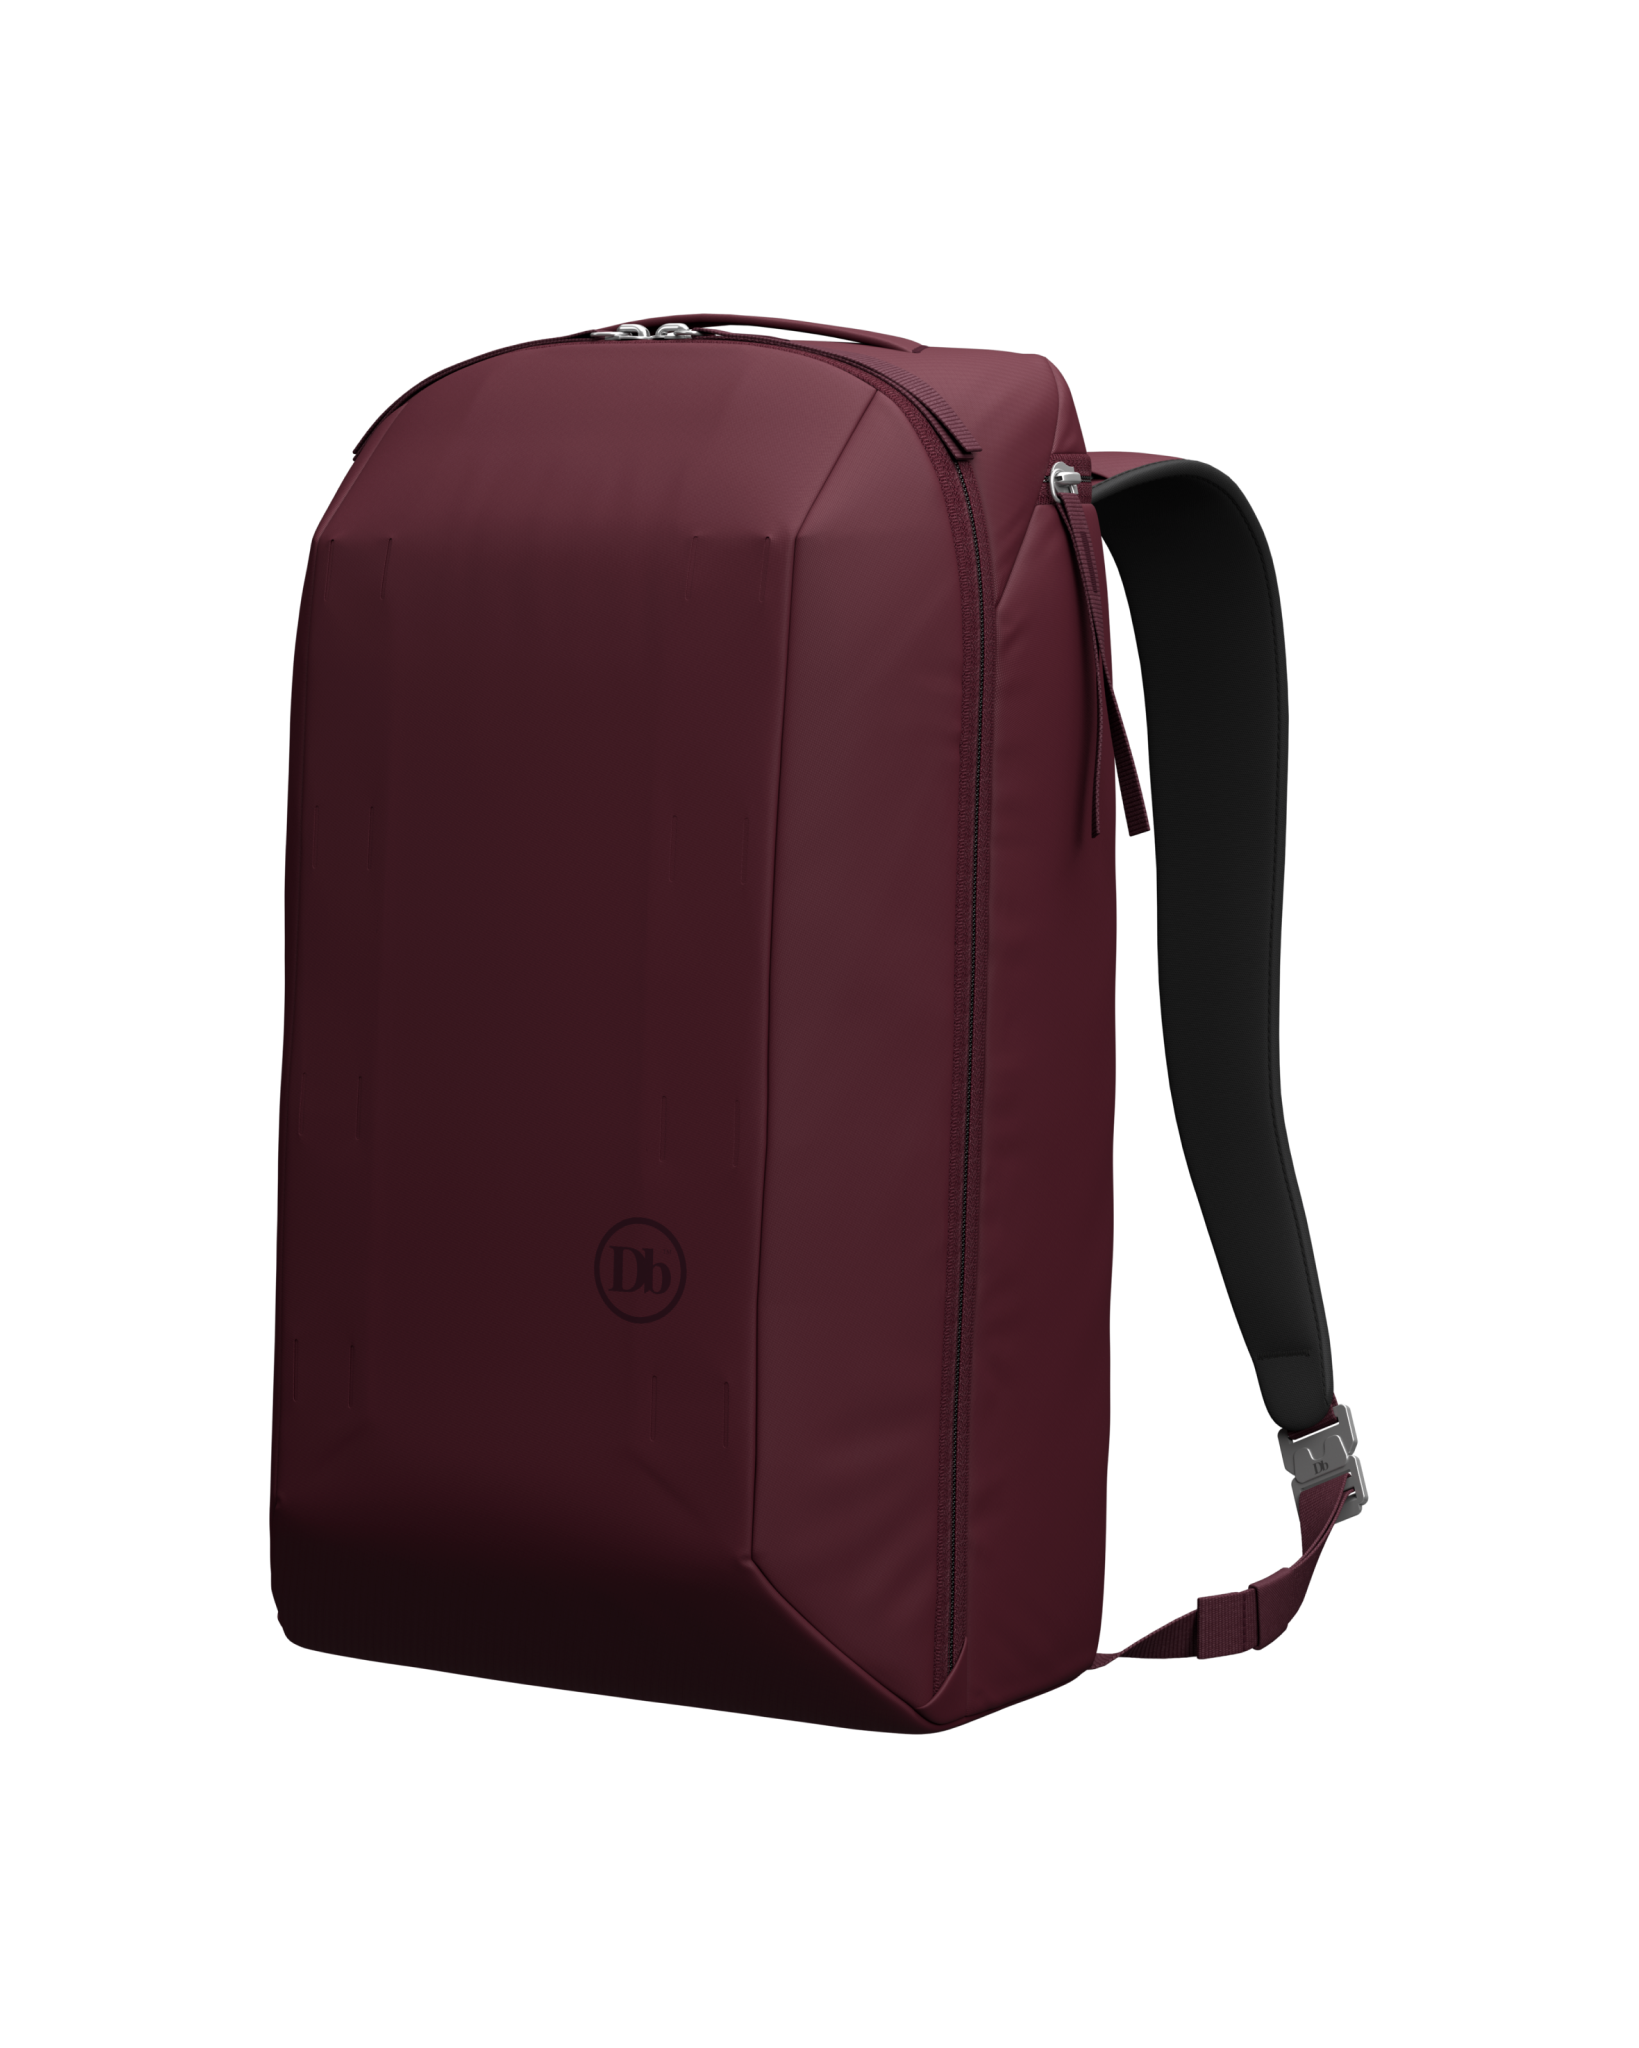 Freya 1St Generation Backpack 16L Raspberry - Raspberry